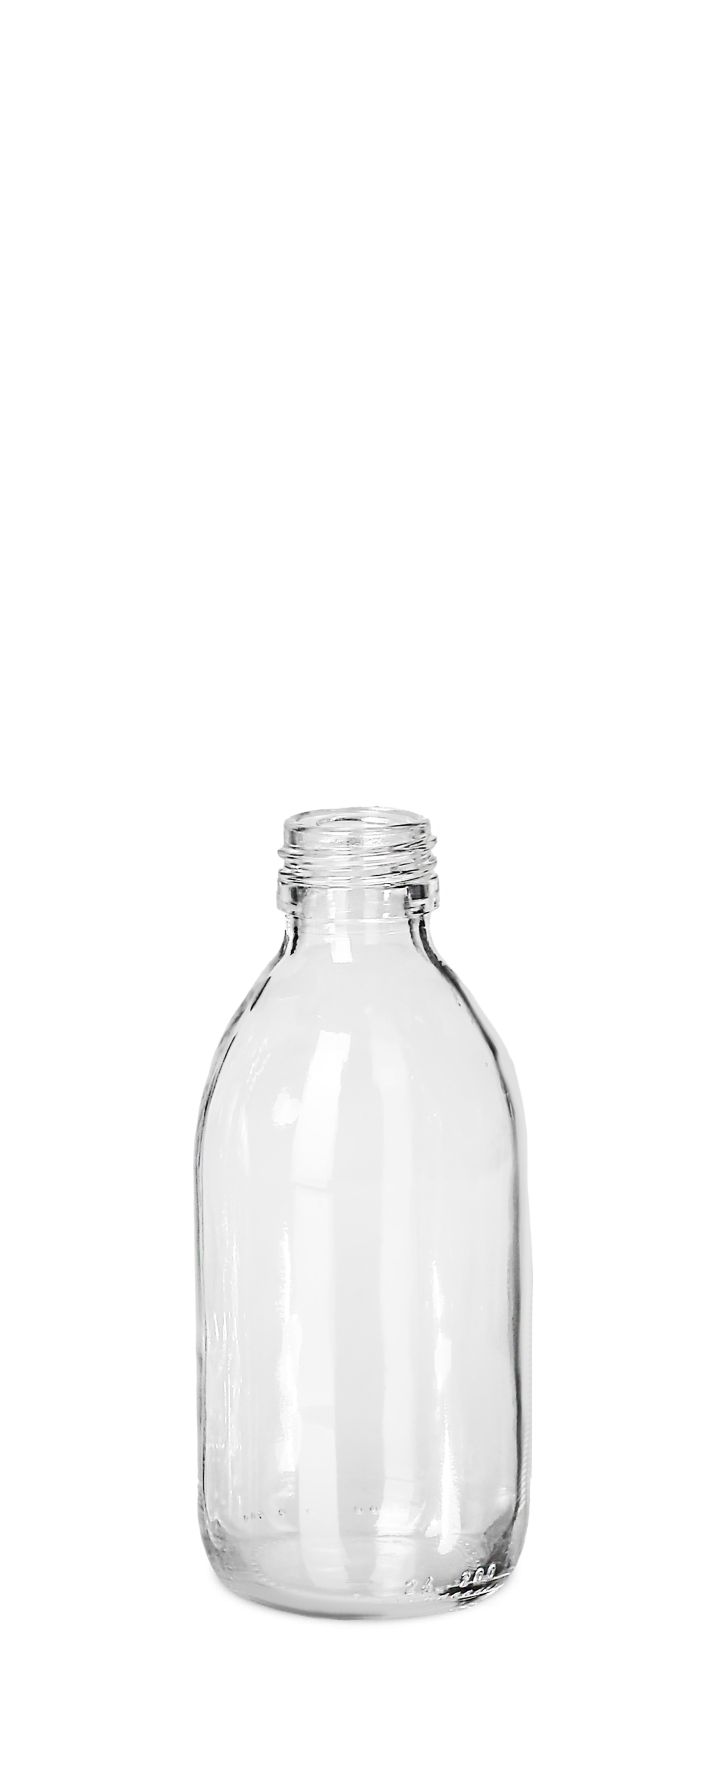 200 ml bottle series sirop bottle